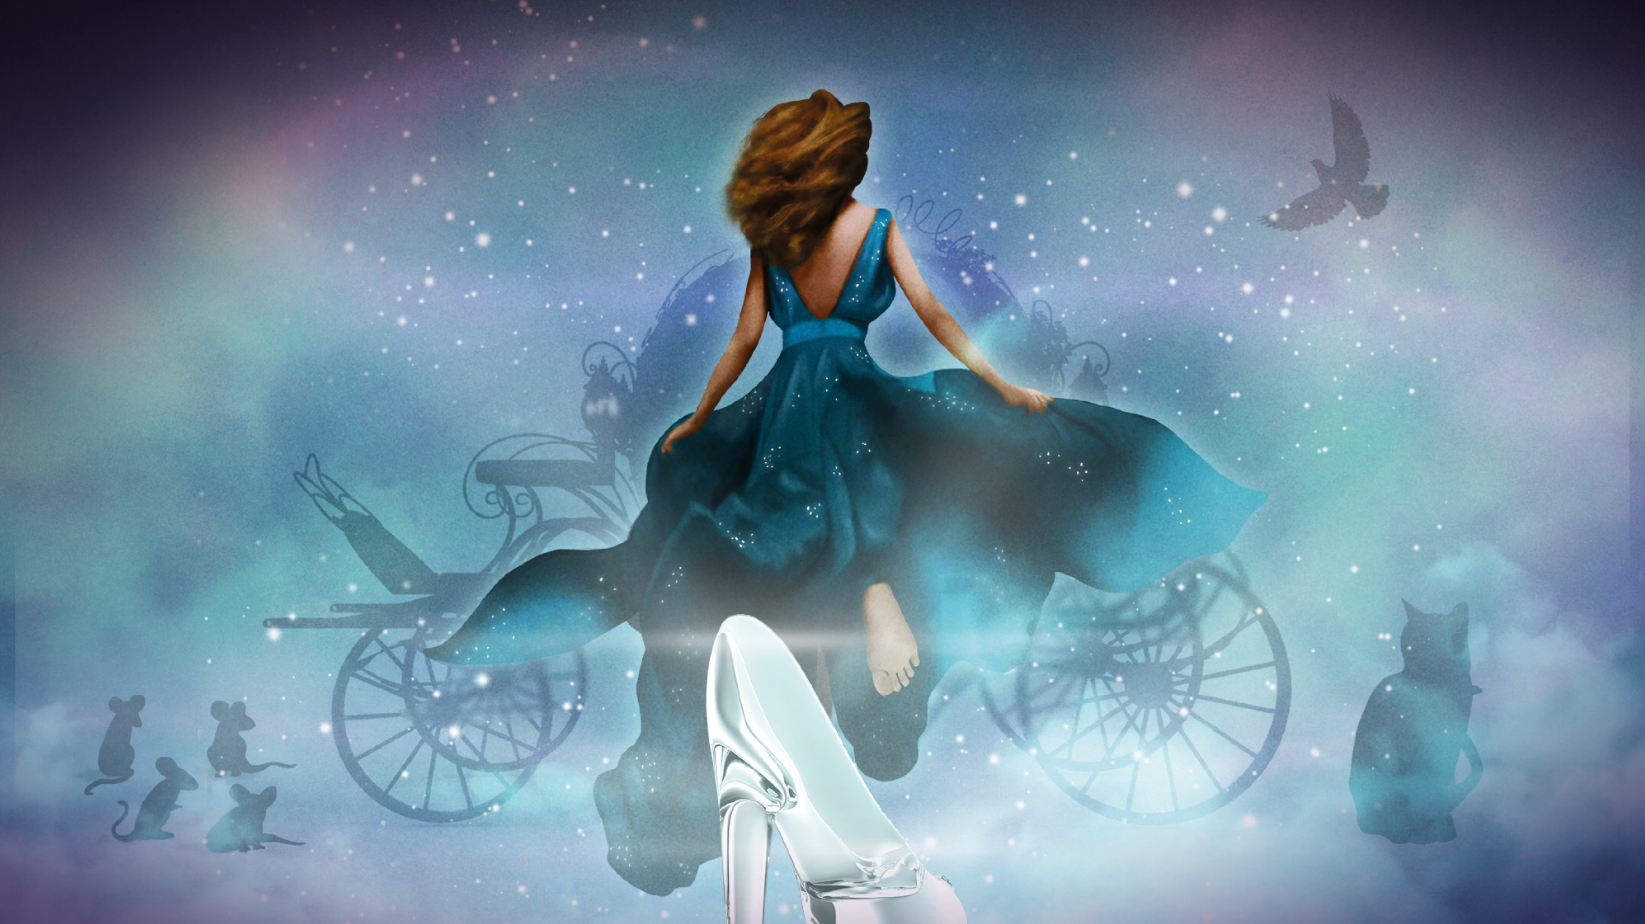 Cinderella Enchanted Musical poster.